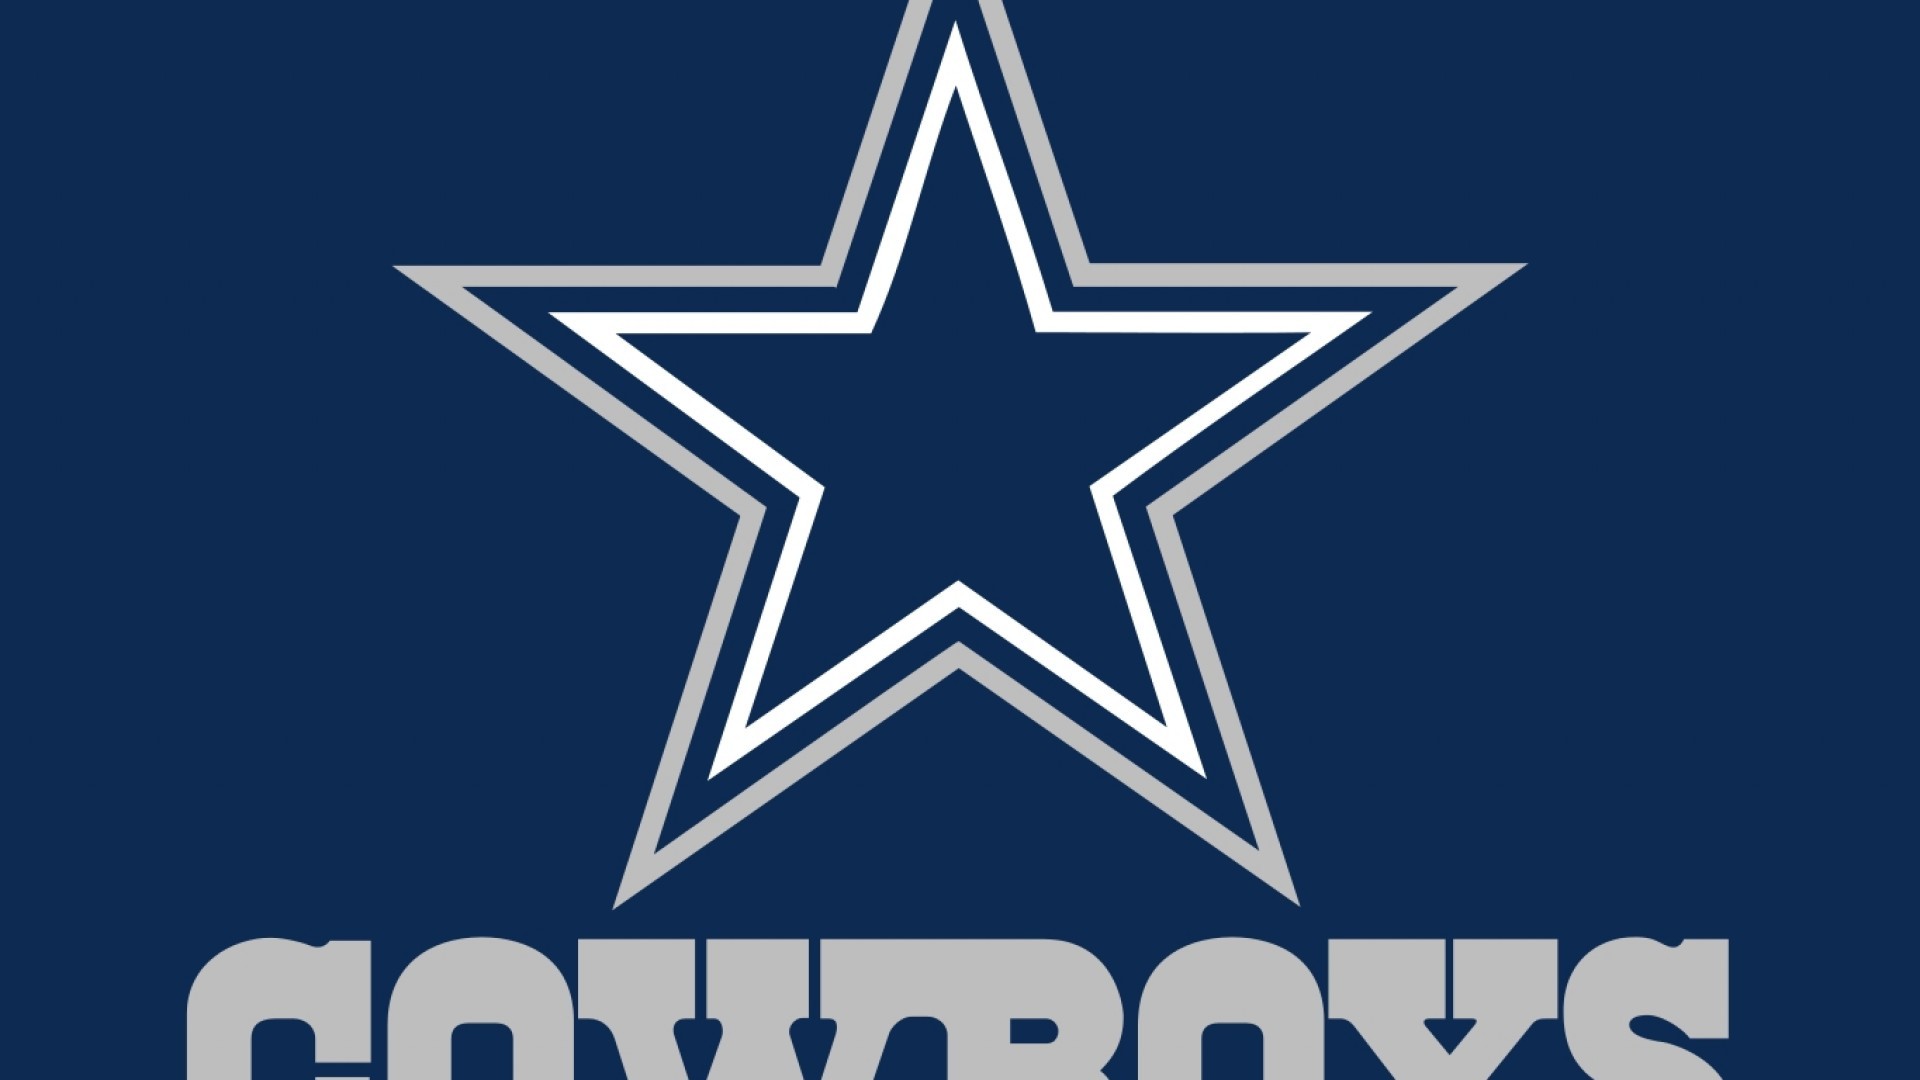 Dallas Cowboys Star Logo Wallpaper (66+ images)